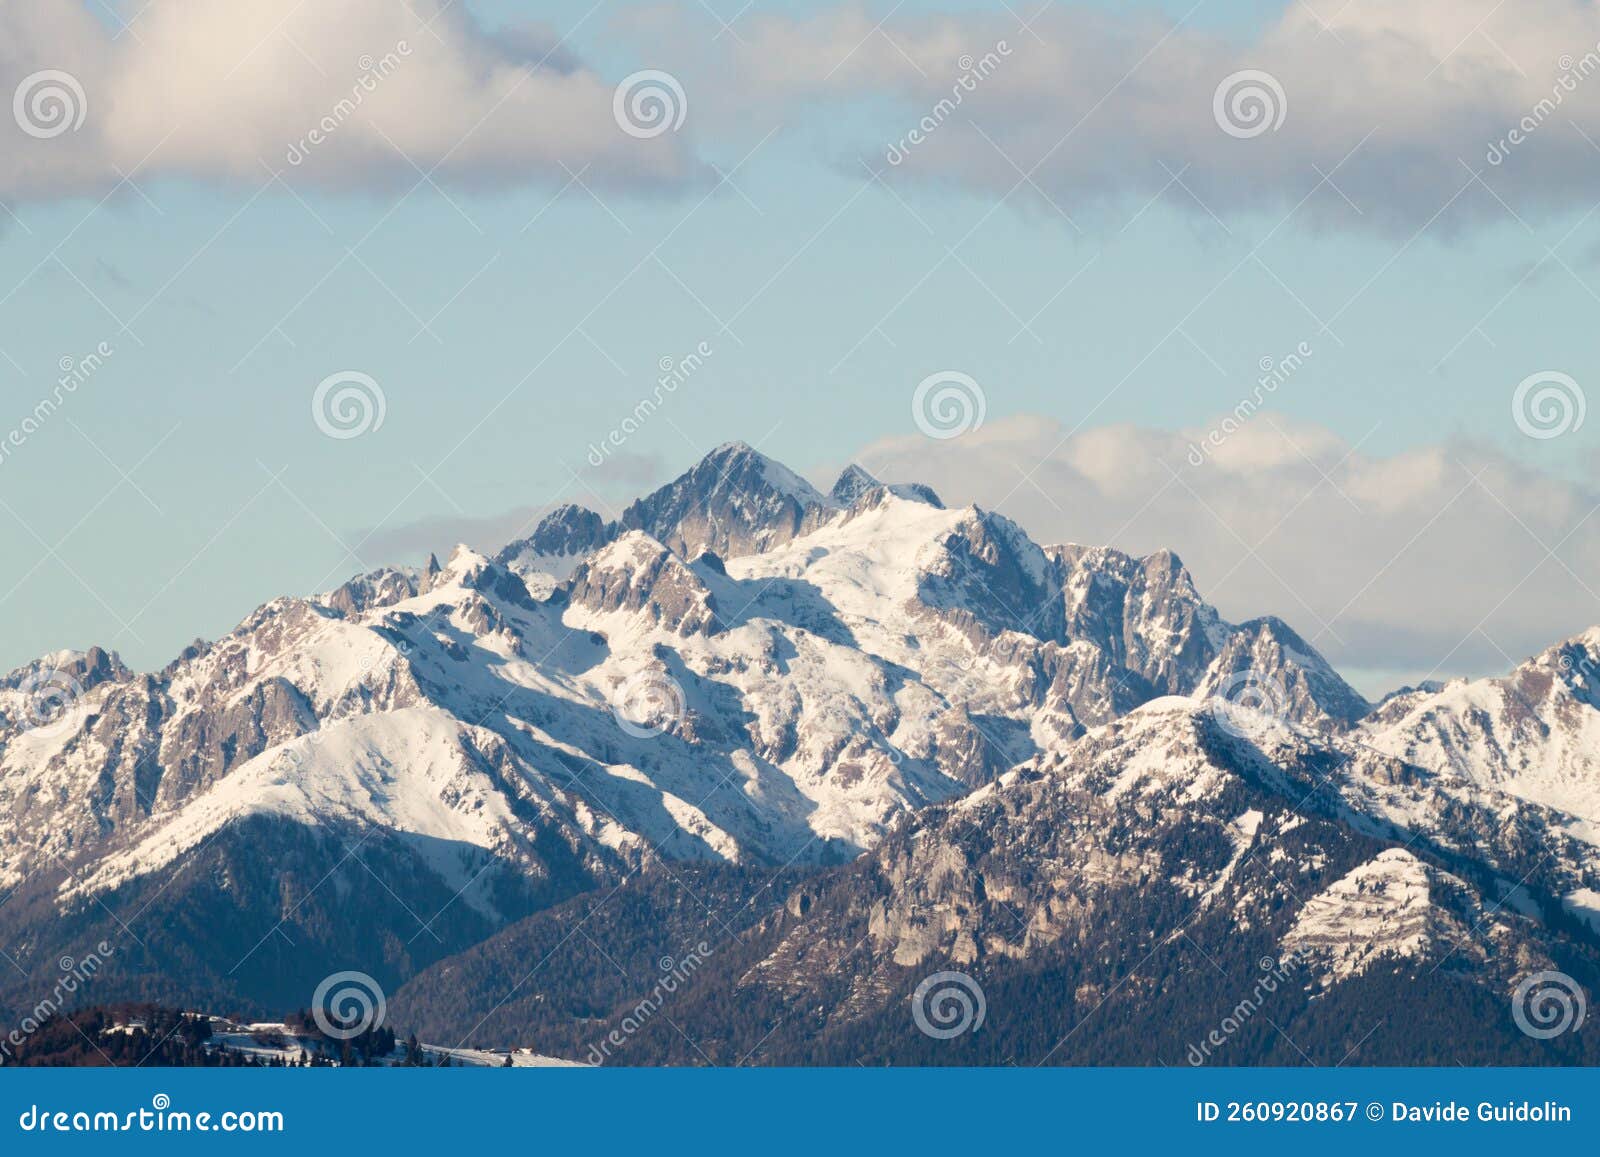 asta peak view. high mountain in italian alps